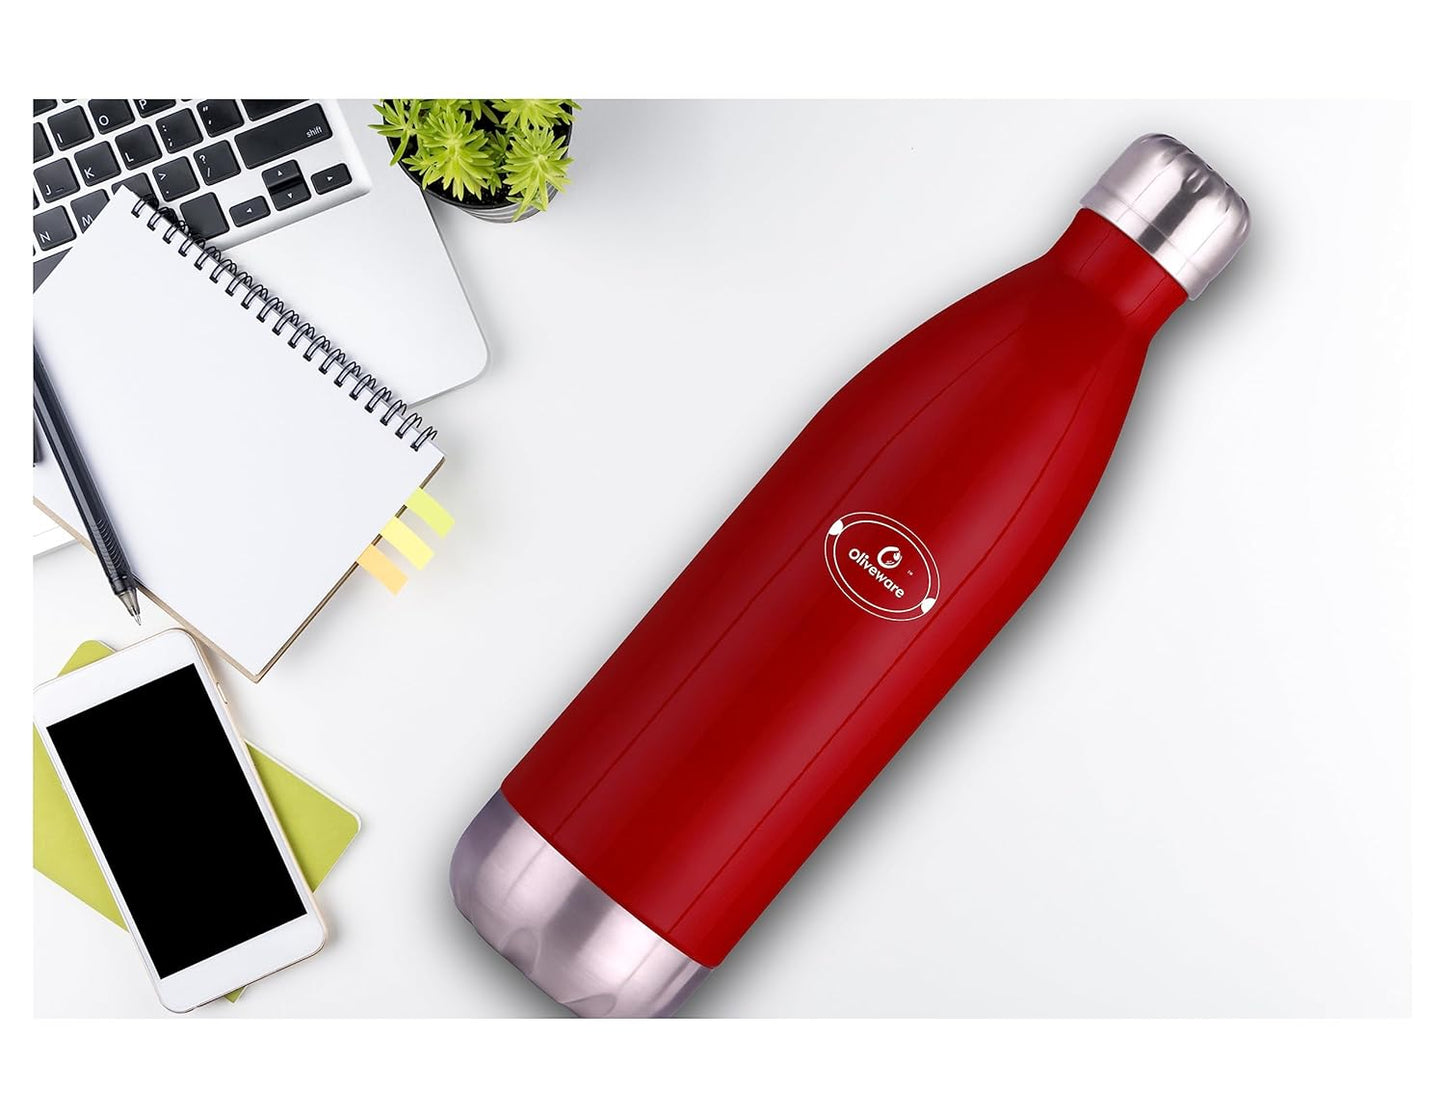 Camo Vaccum Bottle with Sleeve - 750ml